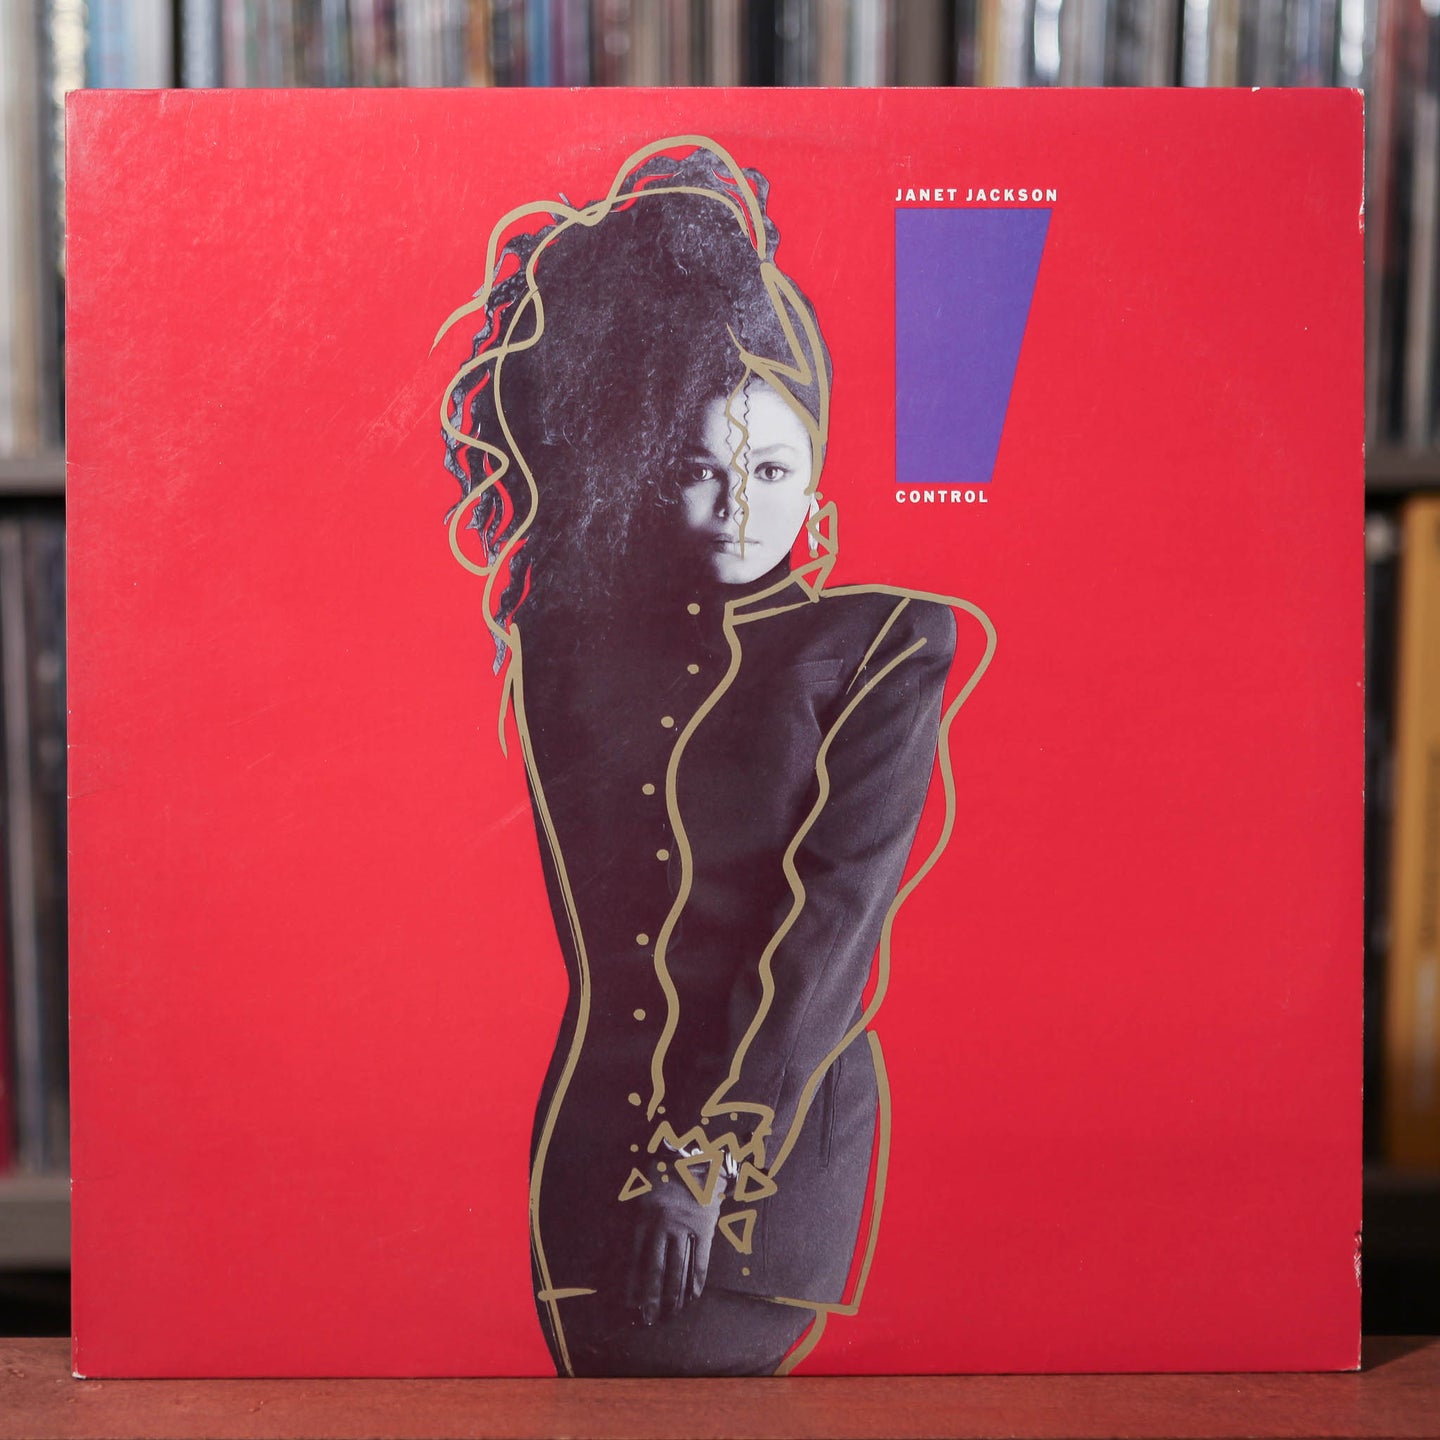 Janet Jackson - Control - 1986 A&M, VG+/VG+